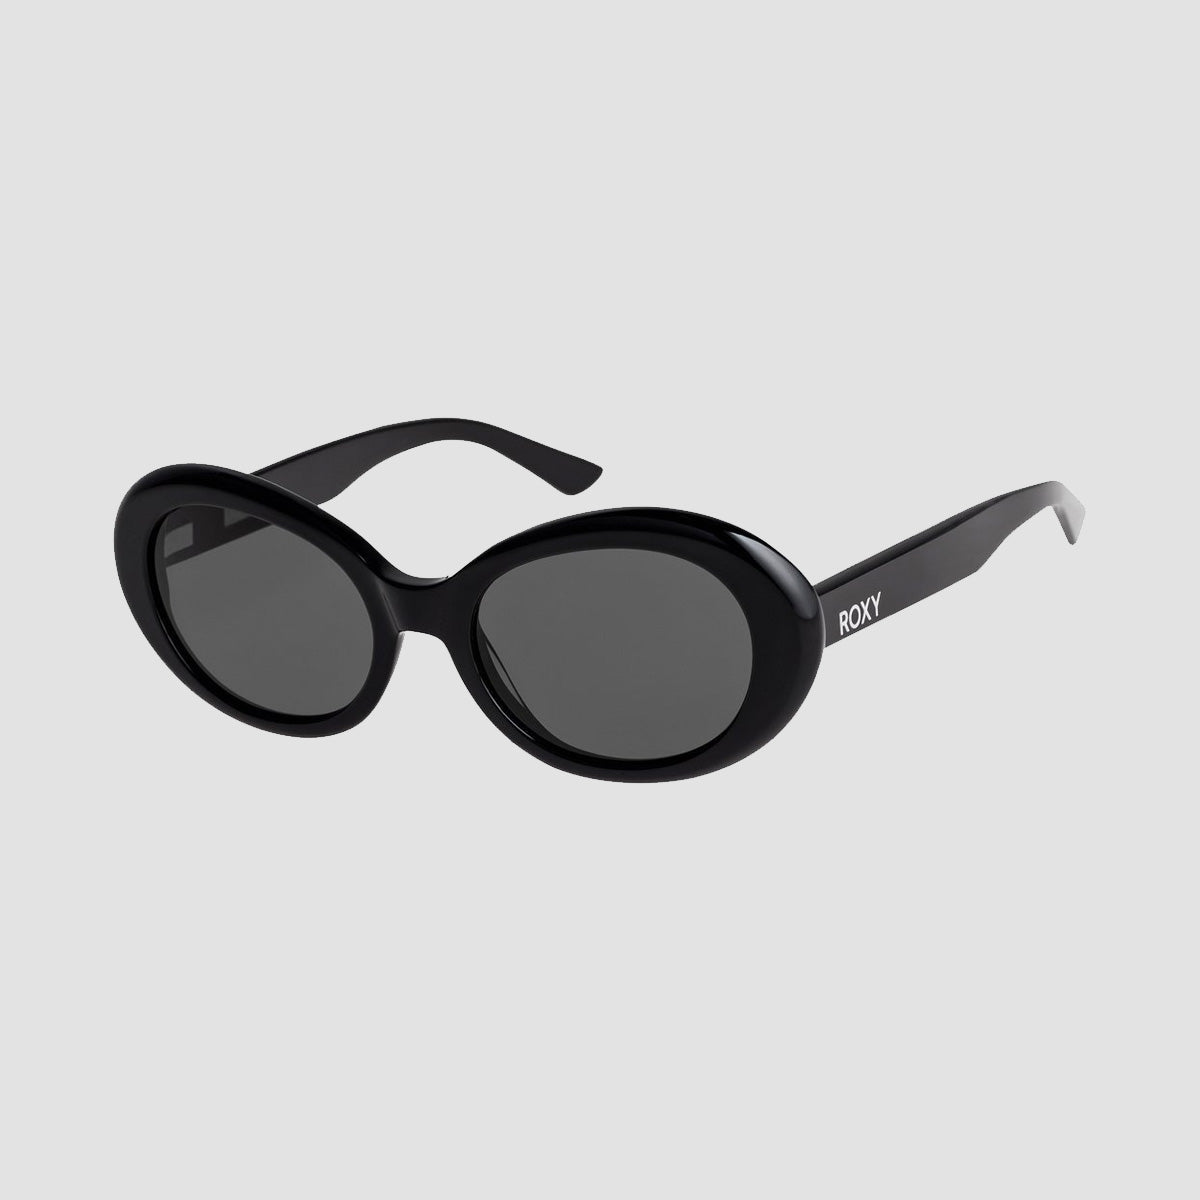 Roxy Dome Sunglasses Shiny Black/Grey - Womens